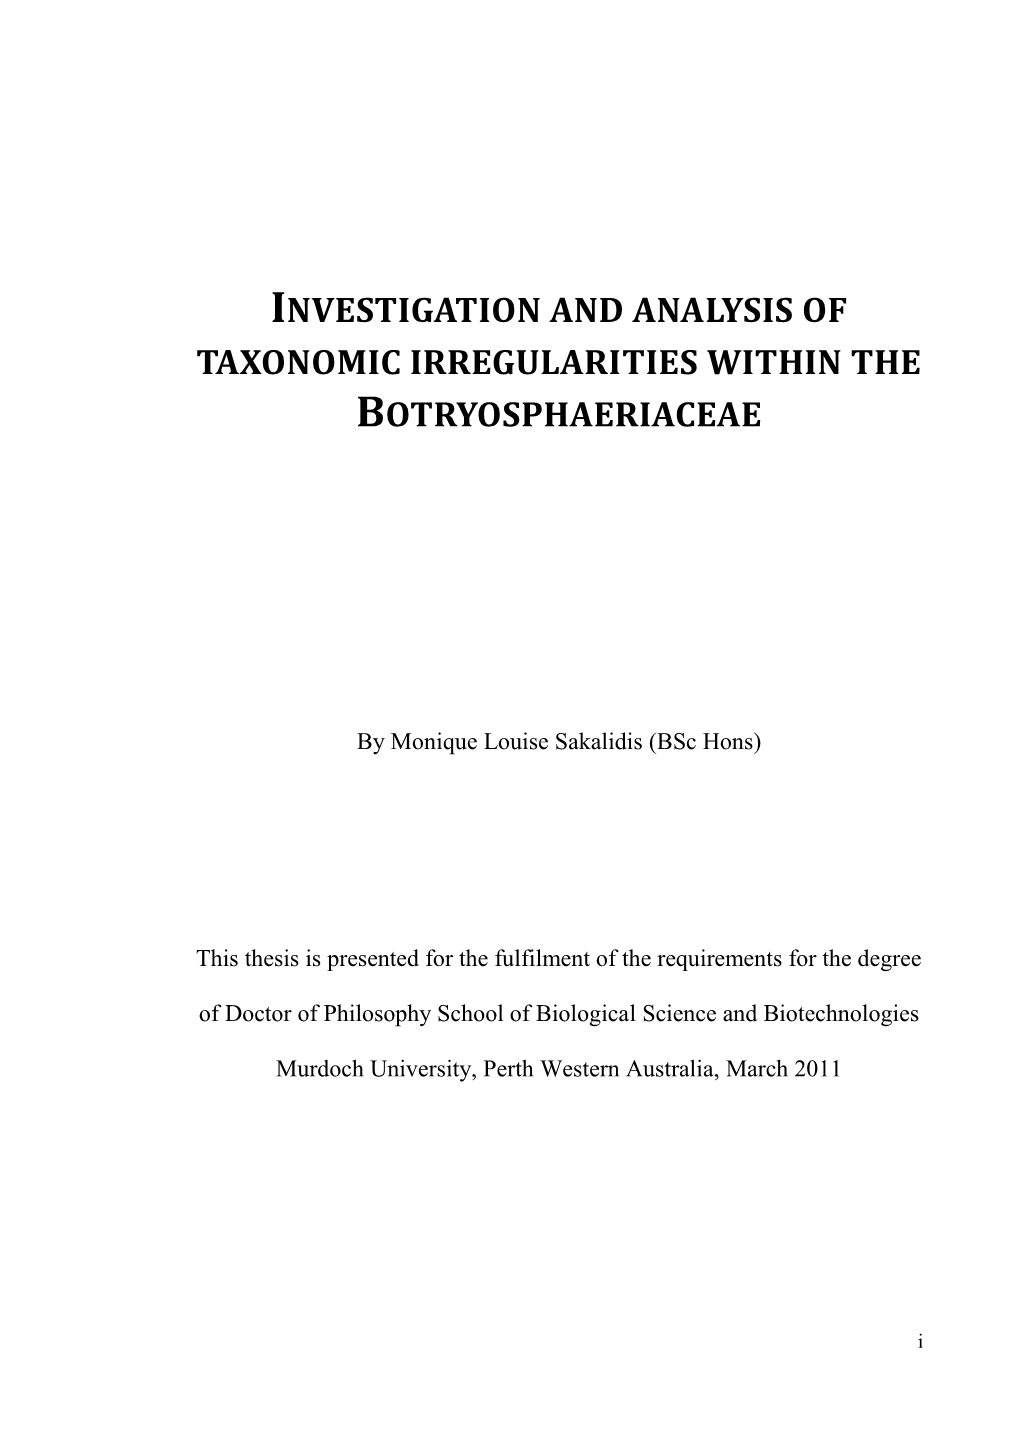 Investigation and Analysis of Taxonomic Irregularities Within the Botryosphaeriaceae